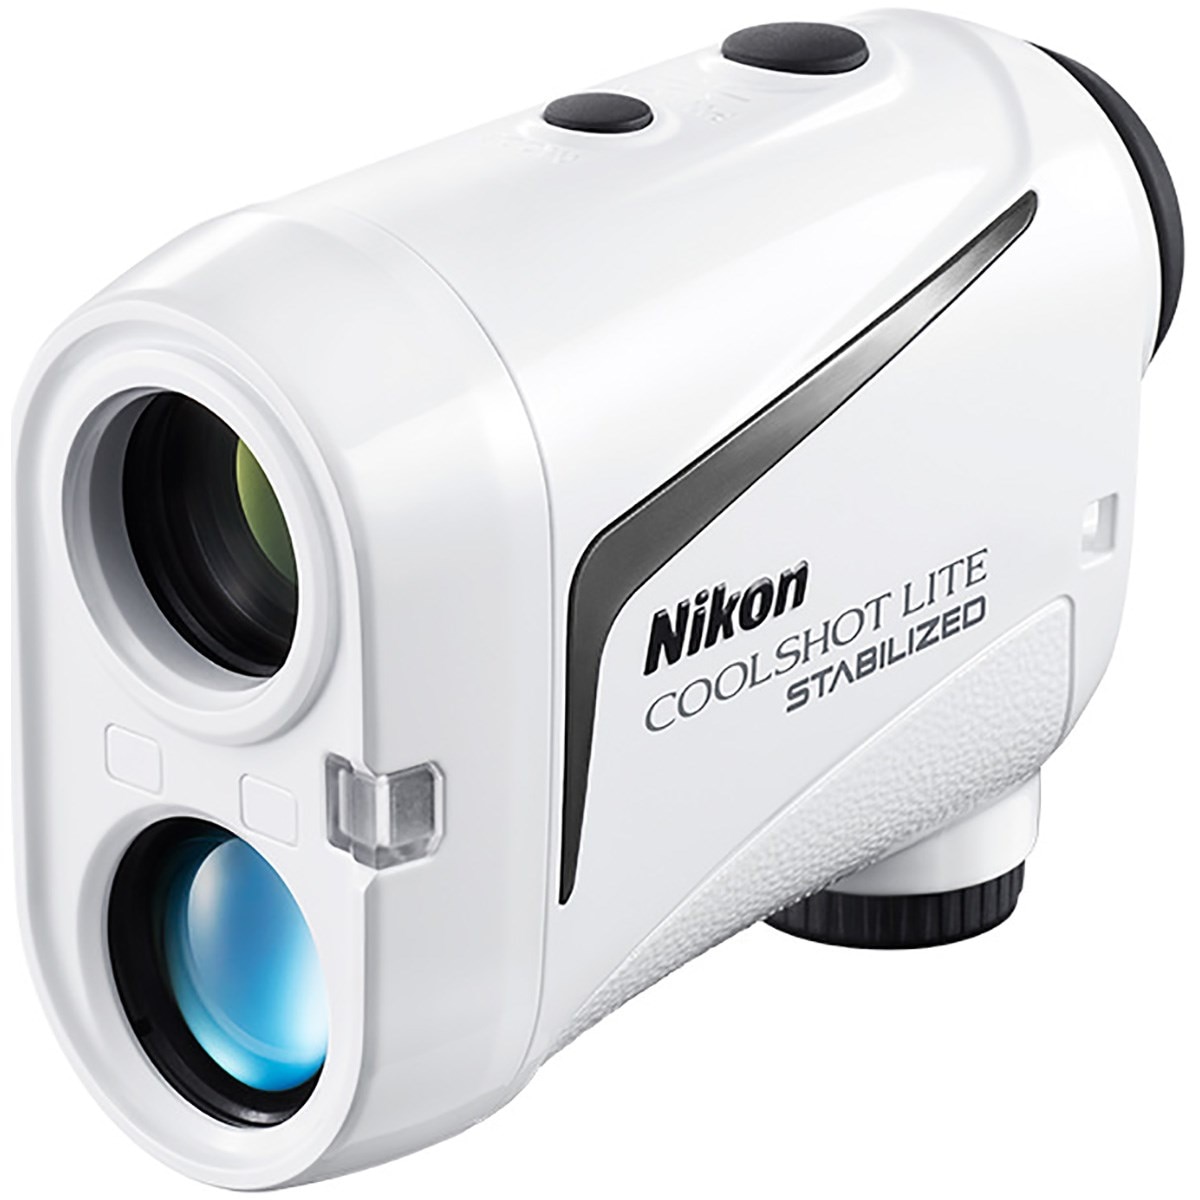 Nikon COOLSHOT LITE STABILIZED WHITE